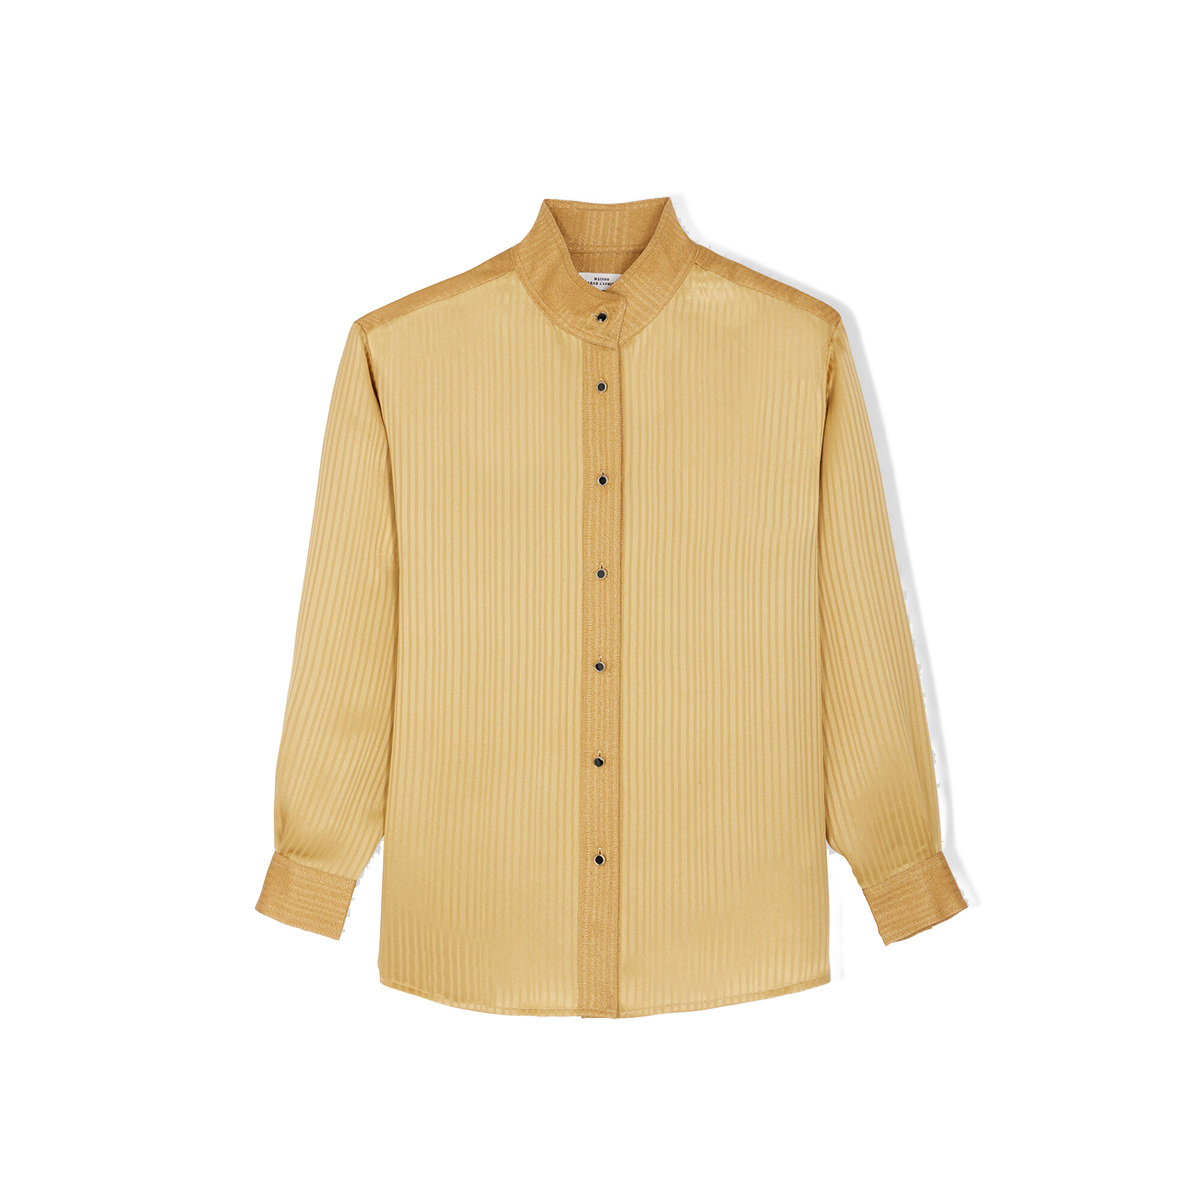 Valois shirt, Jacquard Doré - Silk - image 1